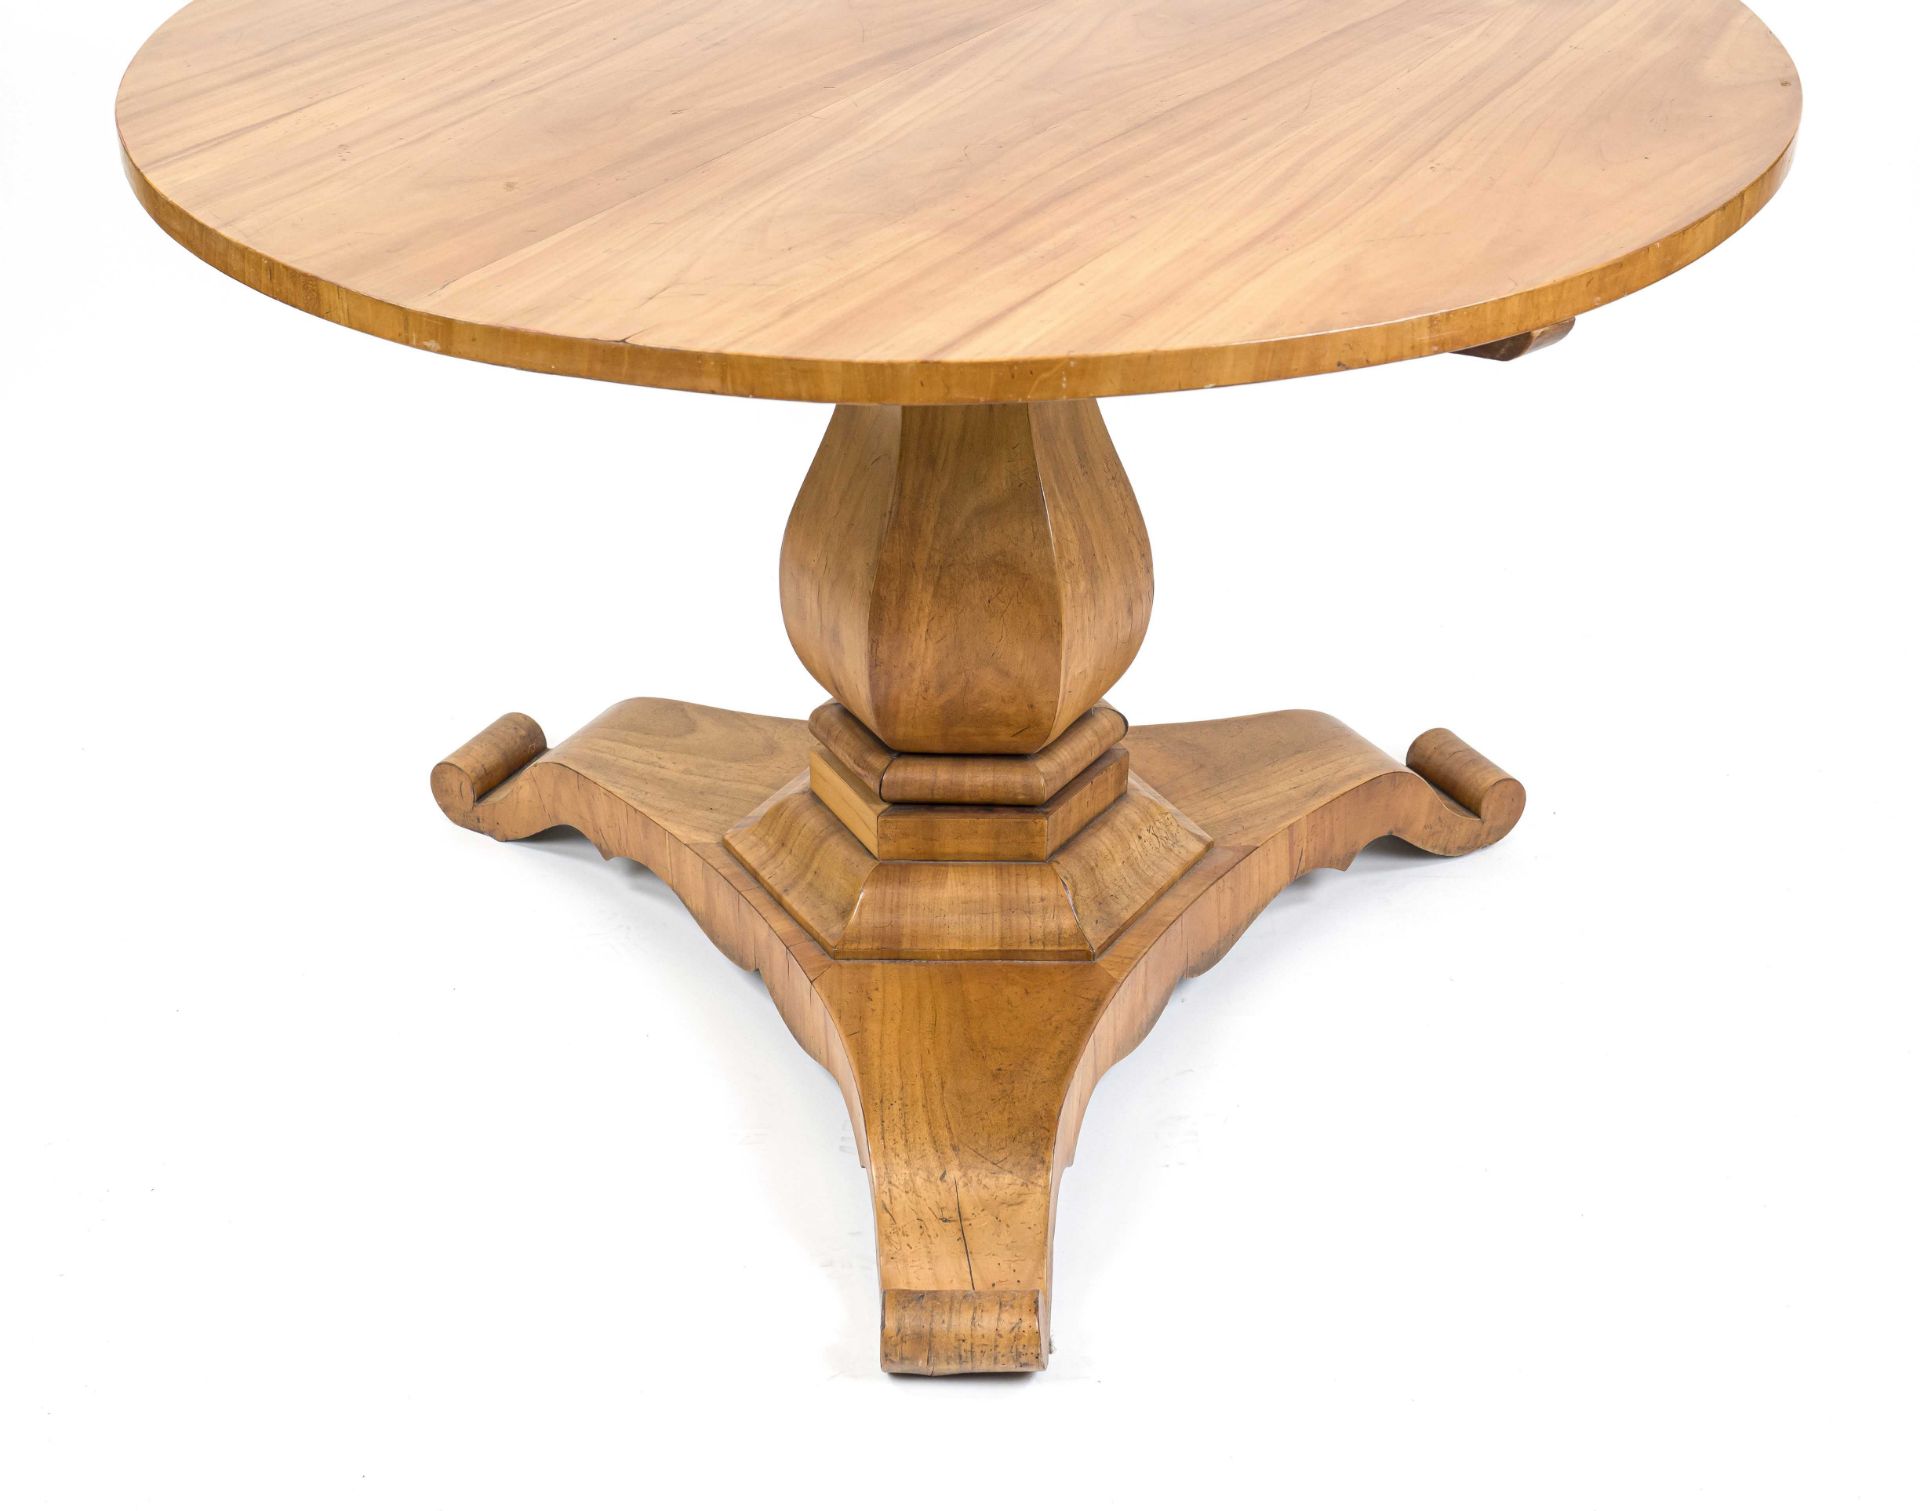 Round Biedermeier dining table, 1st half 19th century, cherry wood, baluster center column, h. 75 - Image 3 of 3